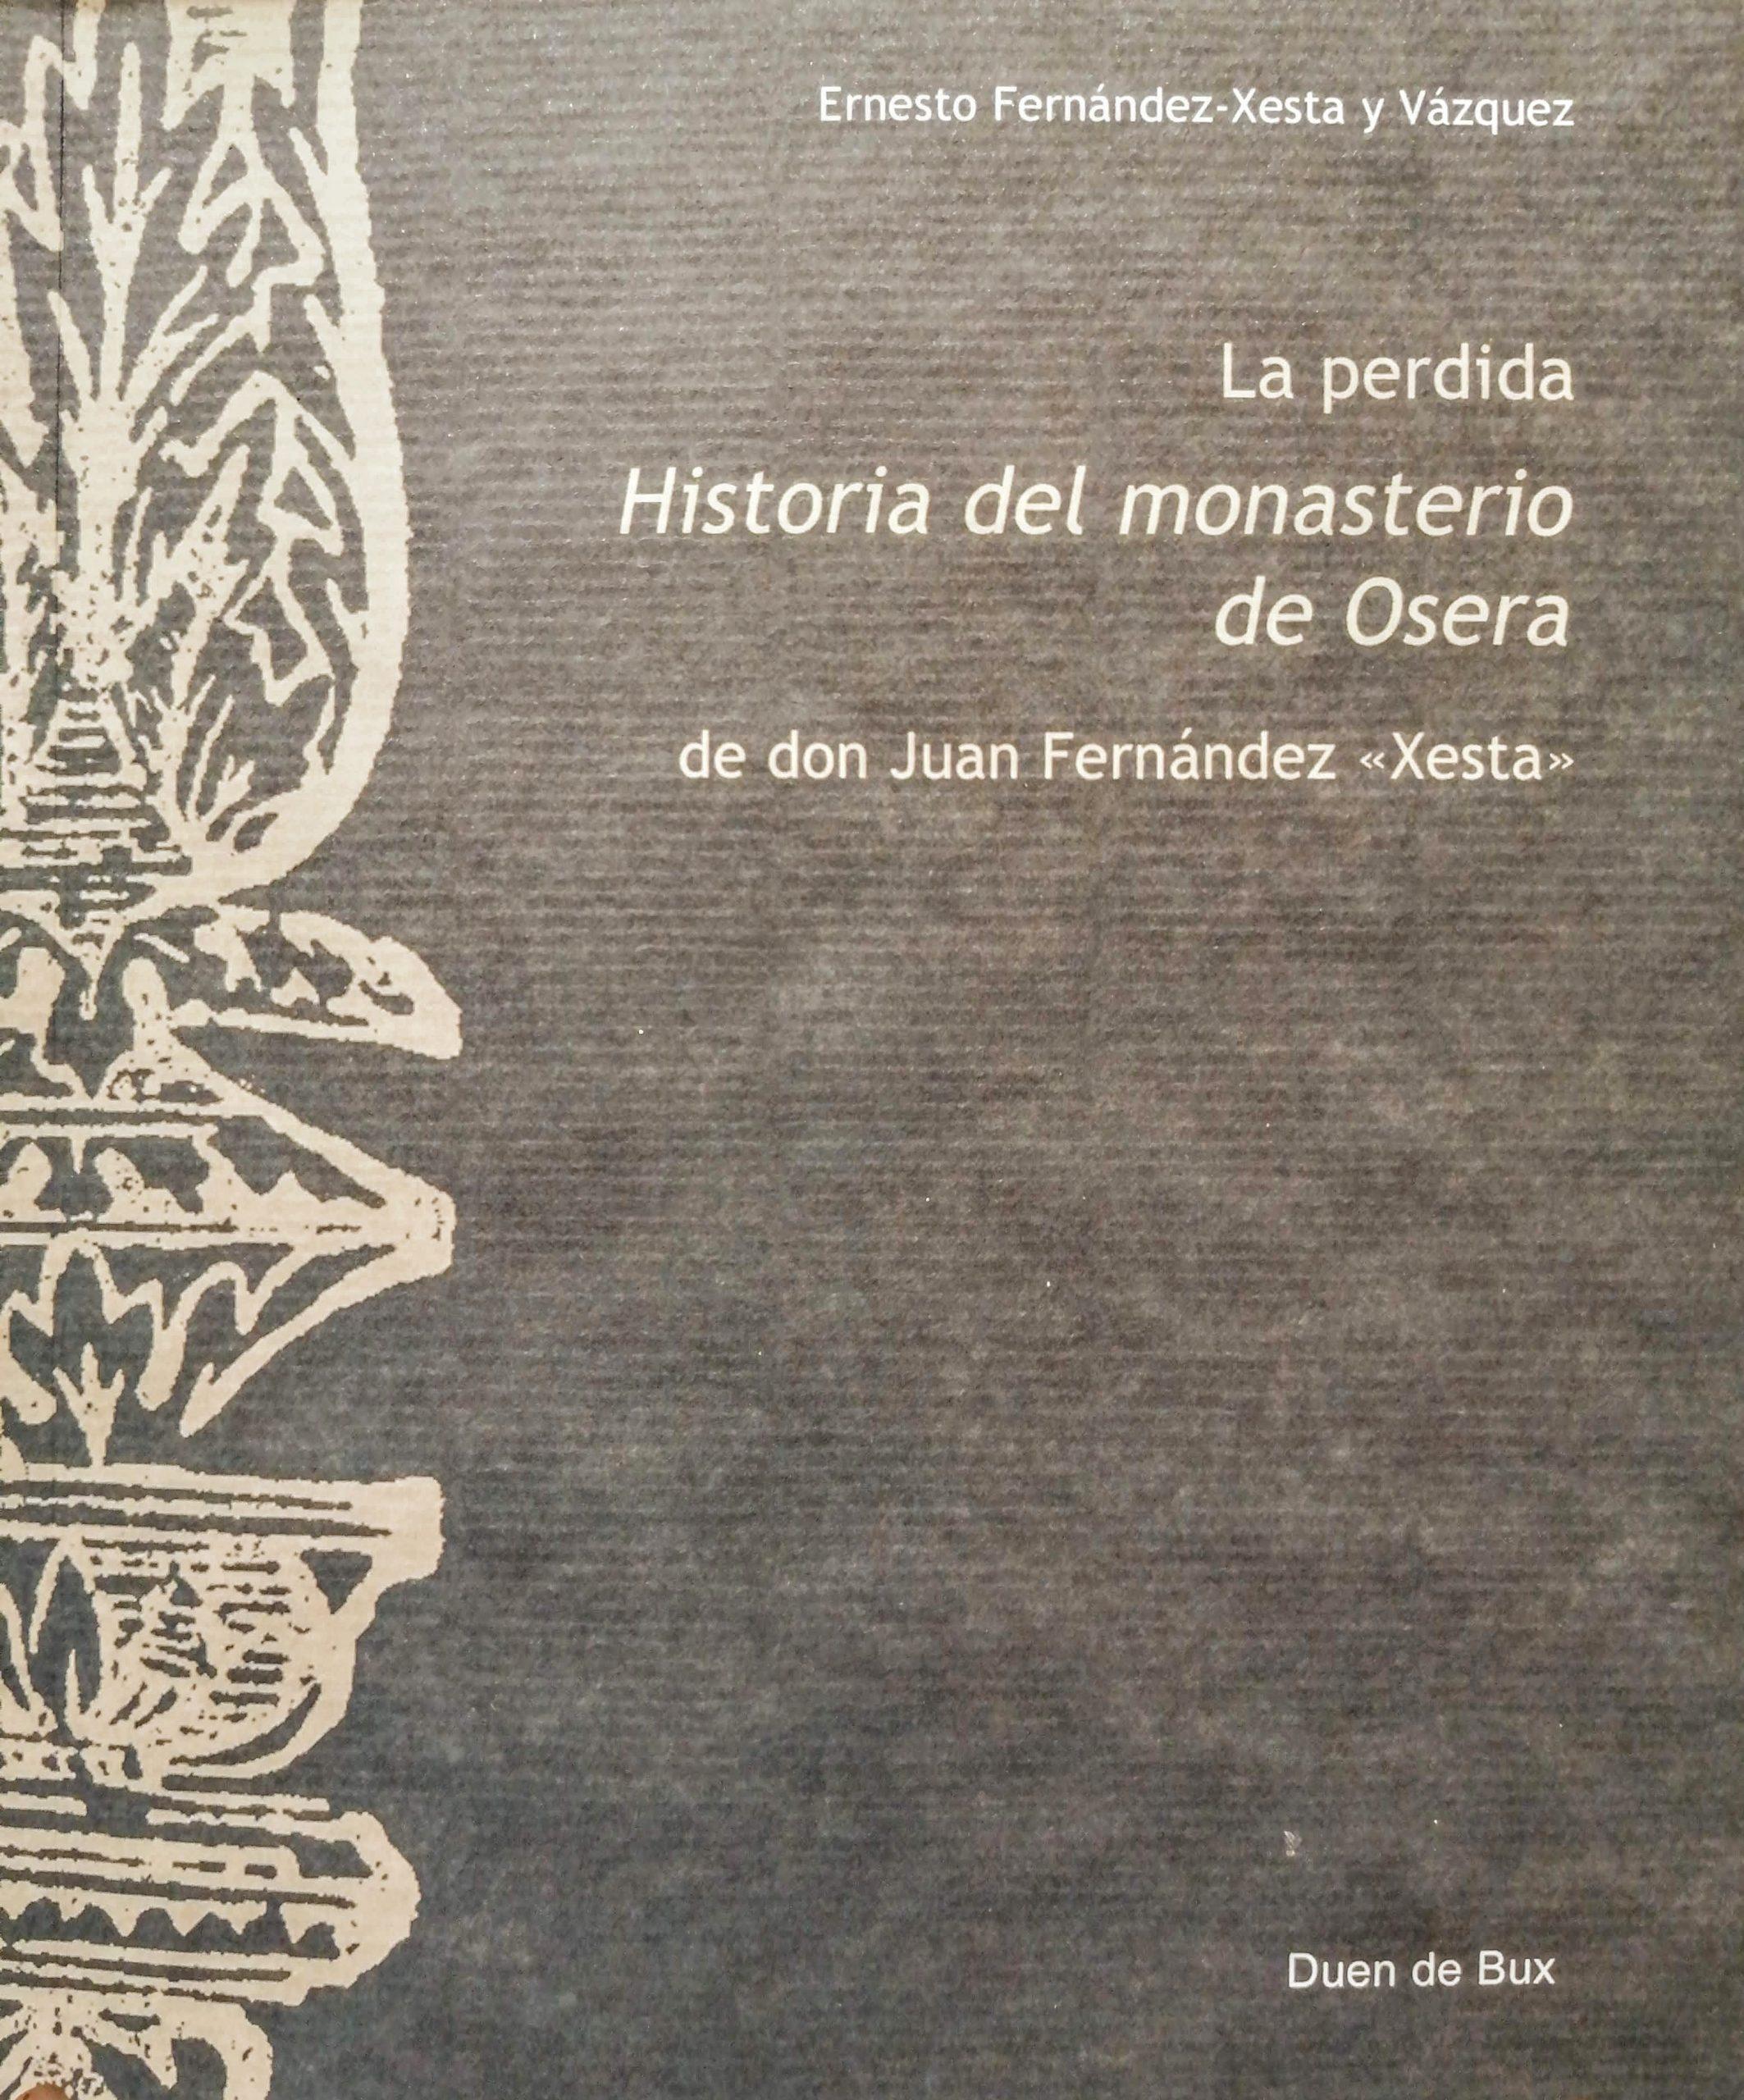 La perdida "Historia del monasterio de Osera